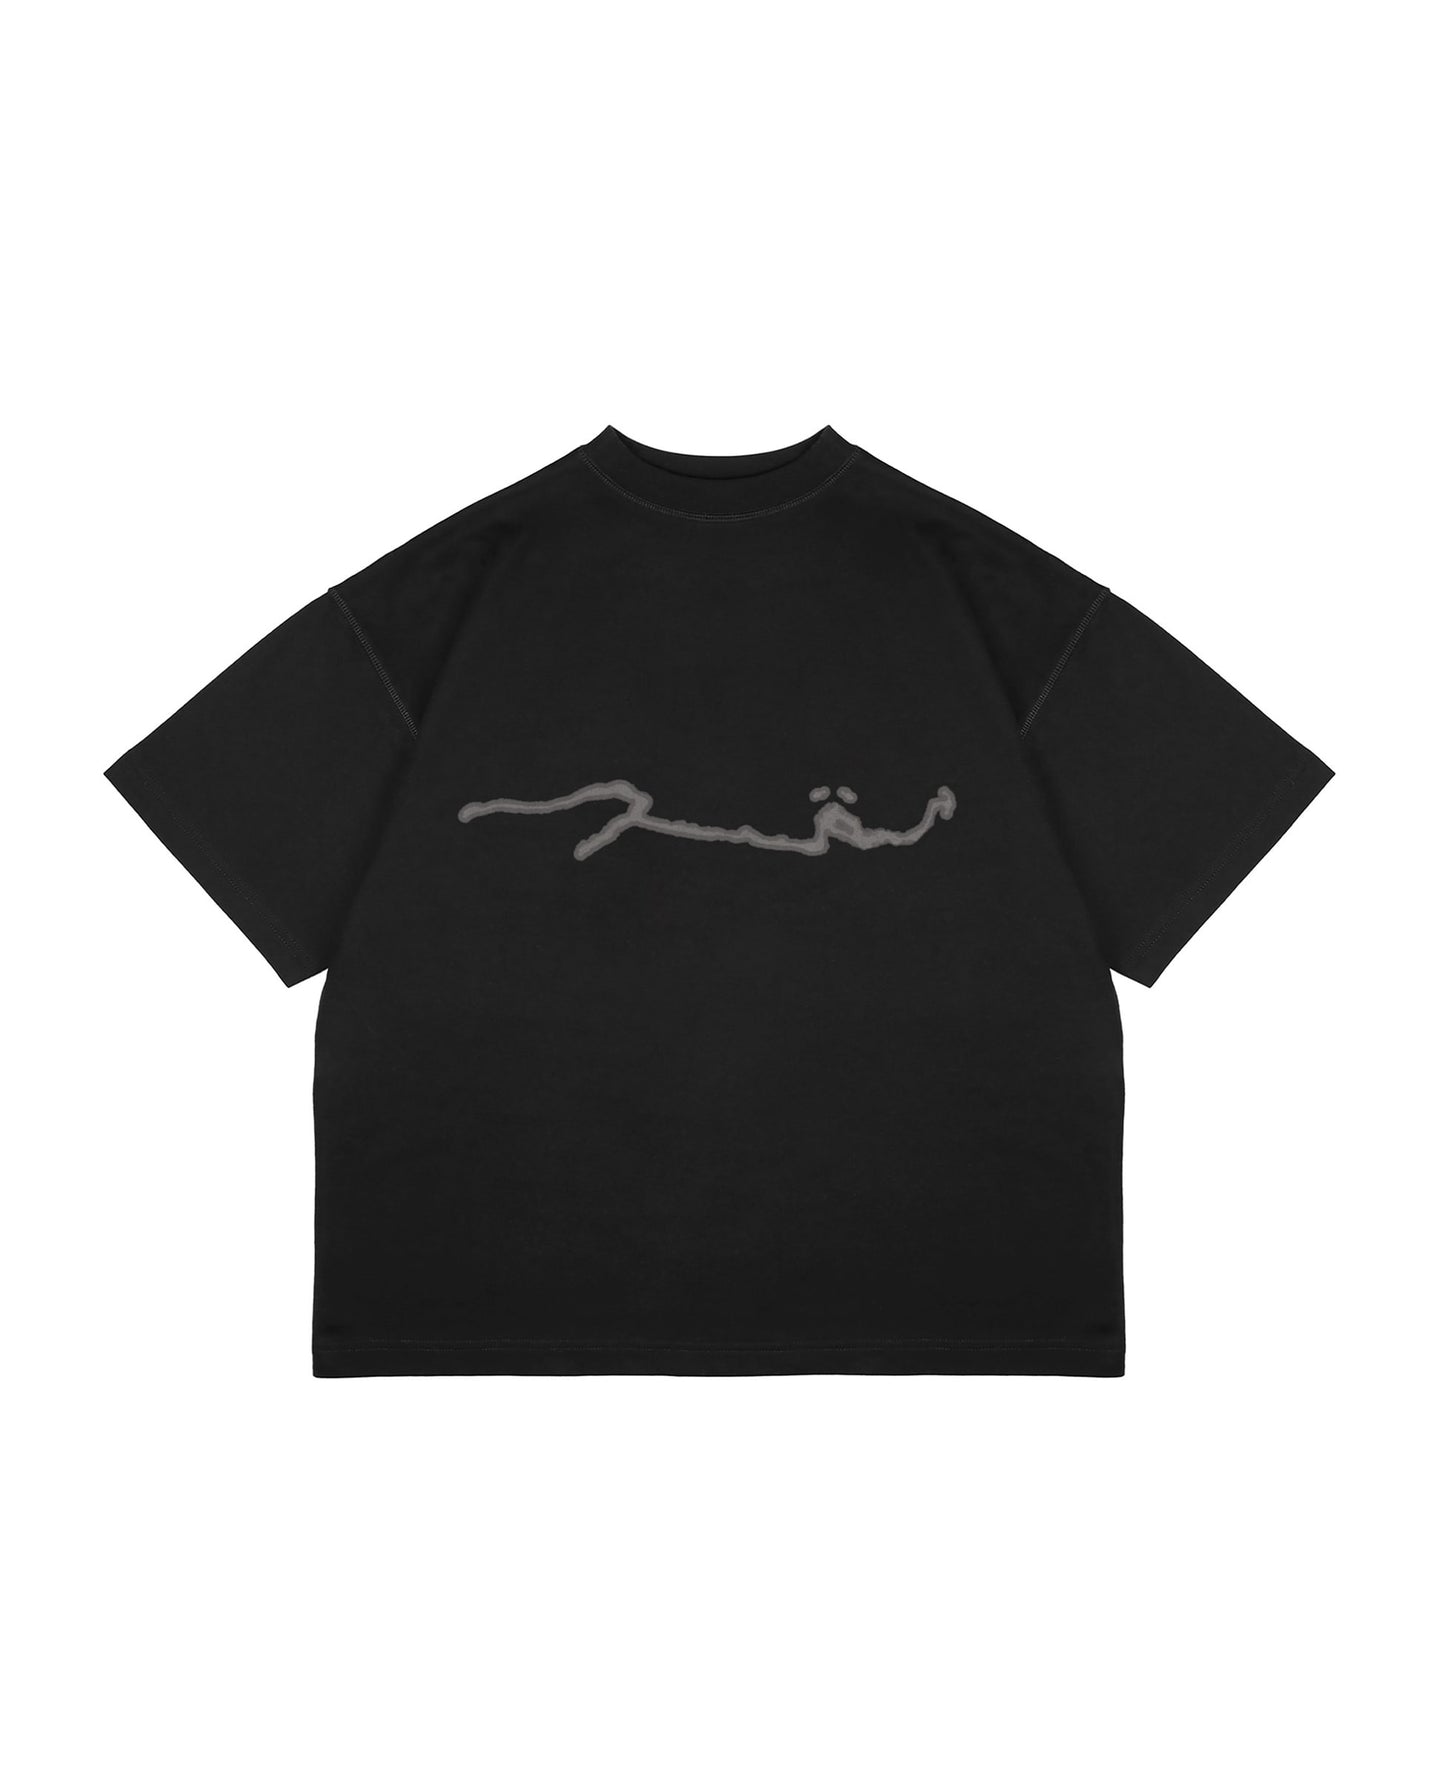 re signed t-shirt - black